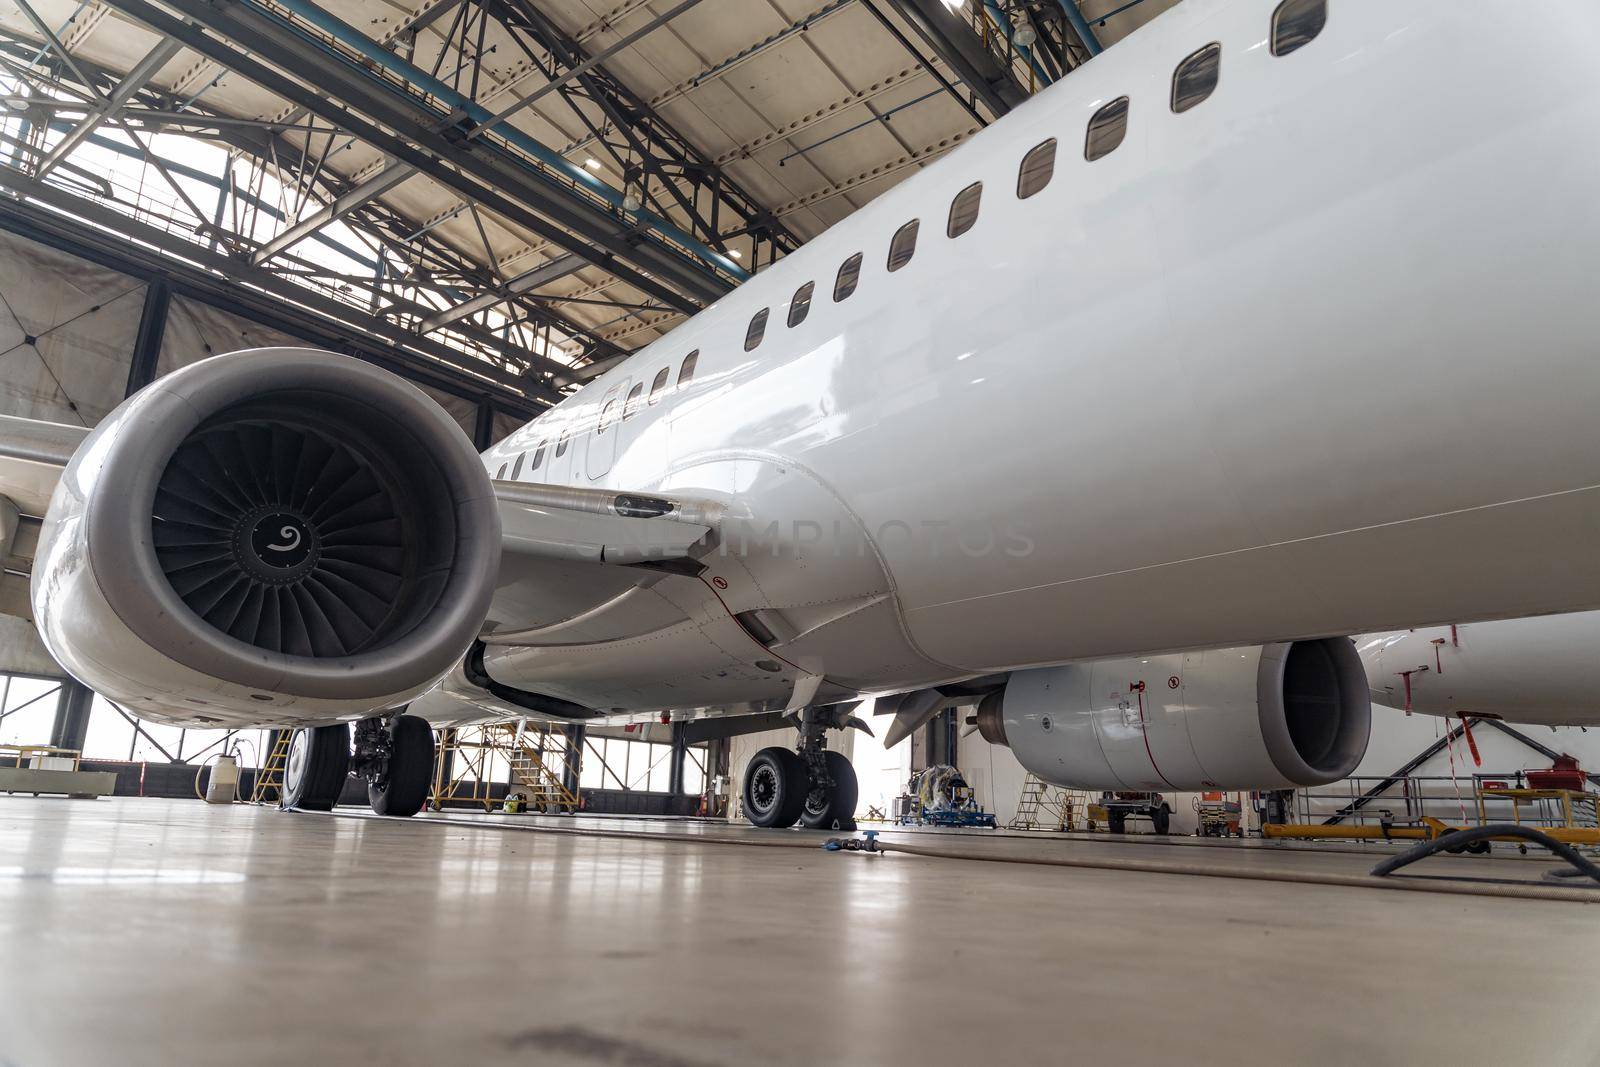 Modern big white passenger airplane on maintenance repair check in airport hangar indoors. Aircraft concept